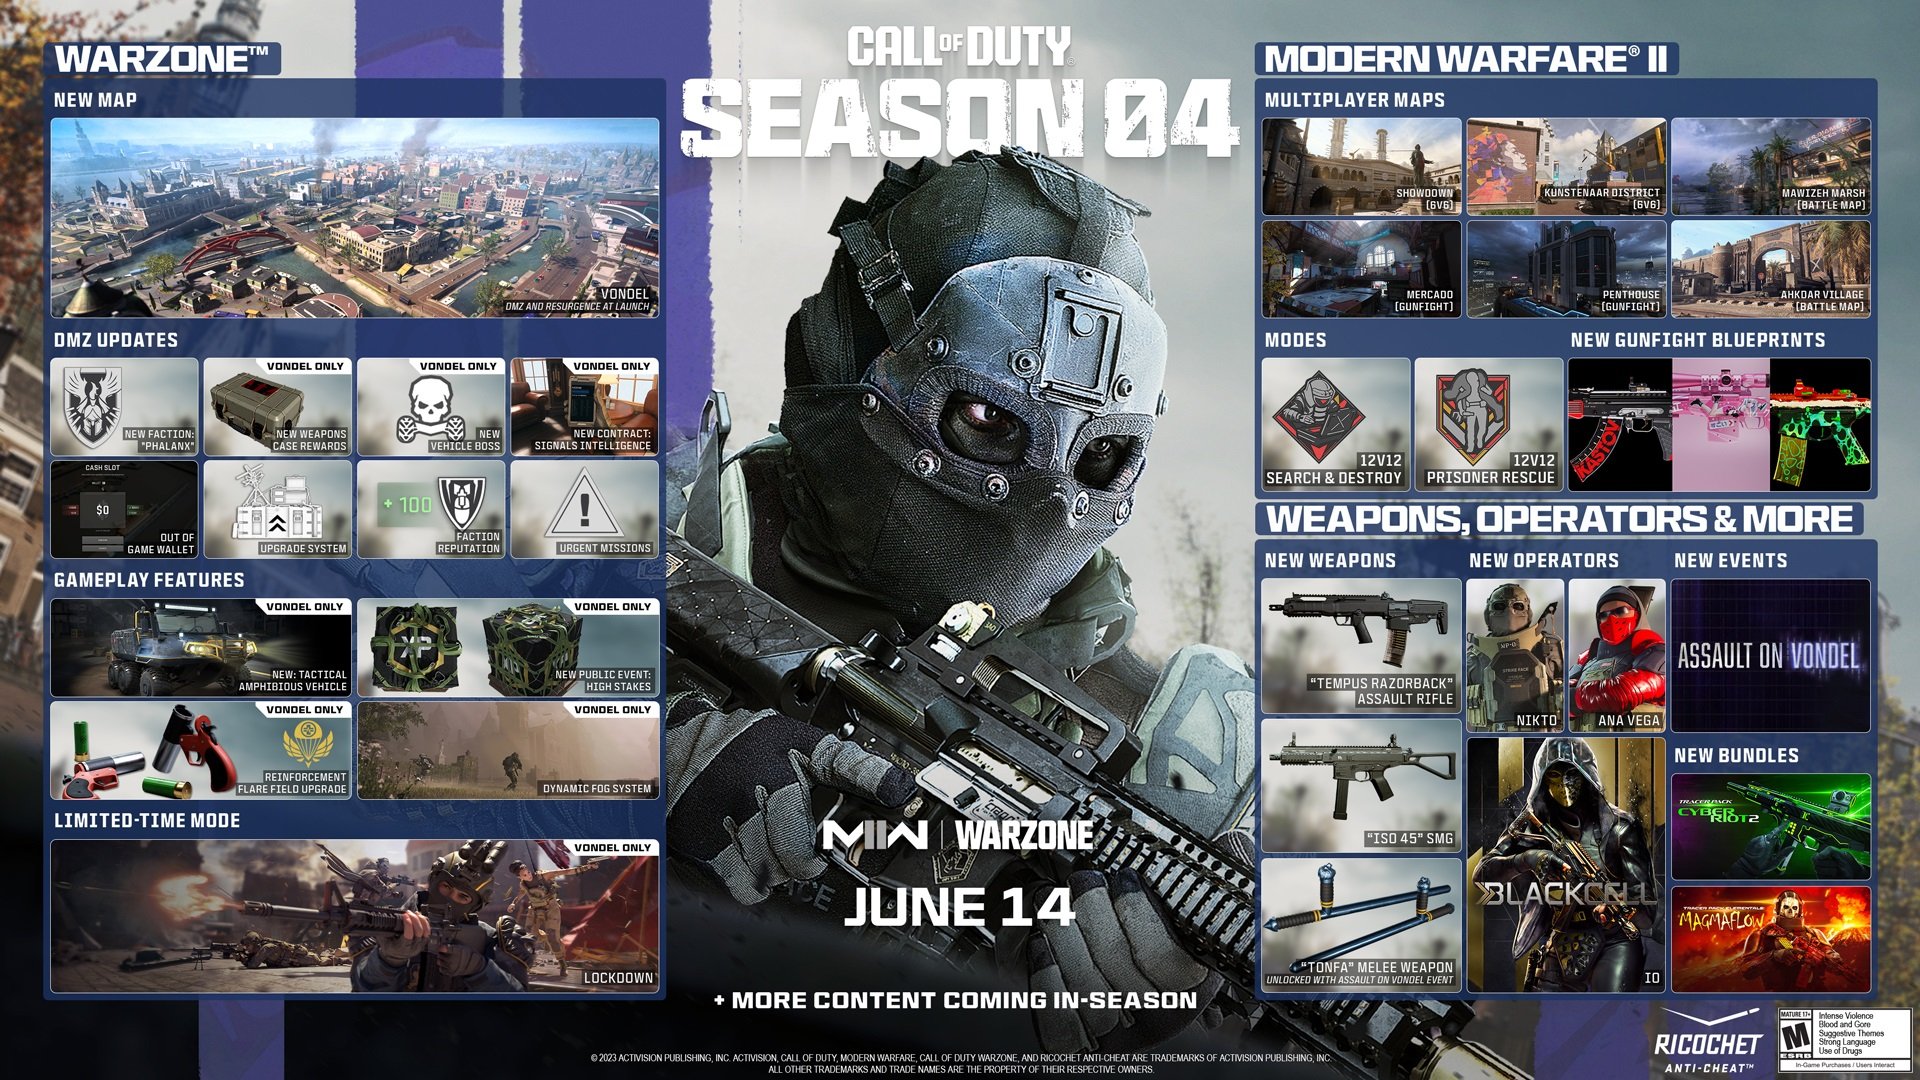 Full details revealed for Modern Warfare II and Warzone 2.0 Season